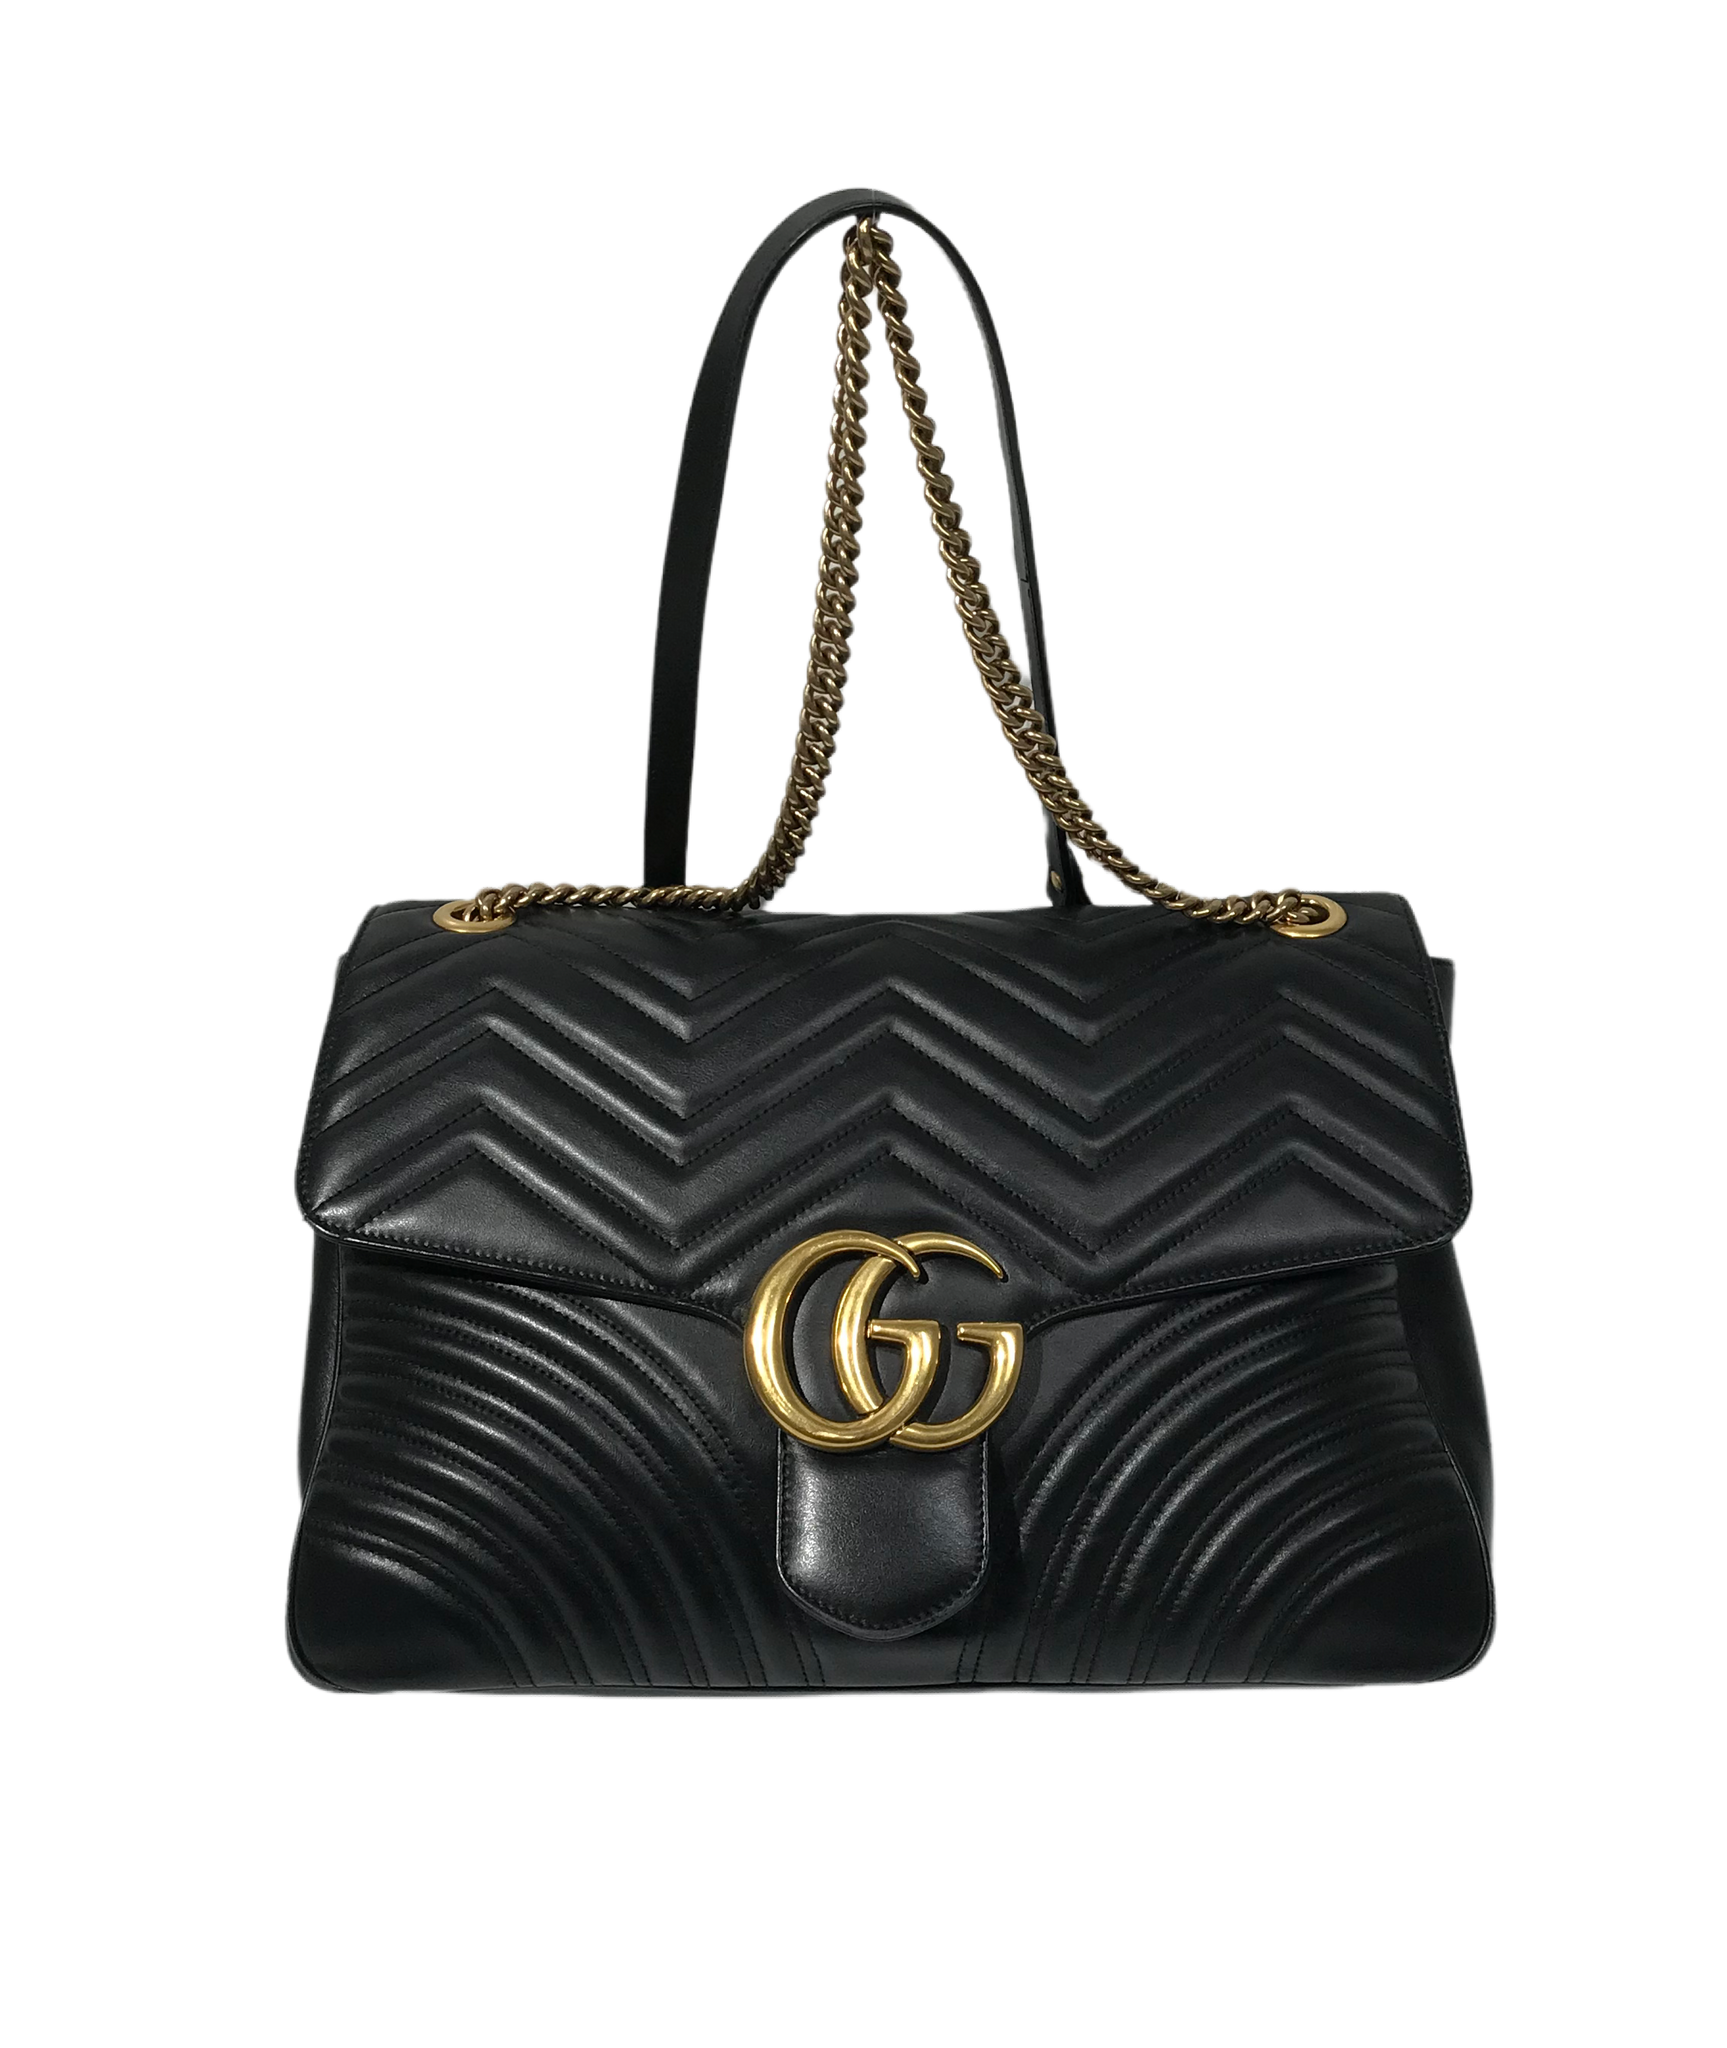 Gucci - Gg Marmont Large Quilted Leather Shoulder Bag - Black